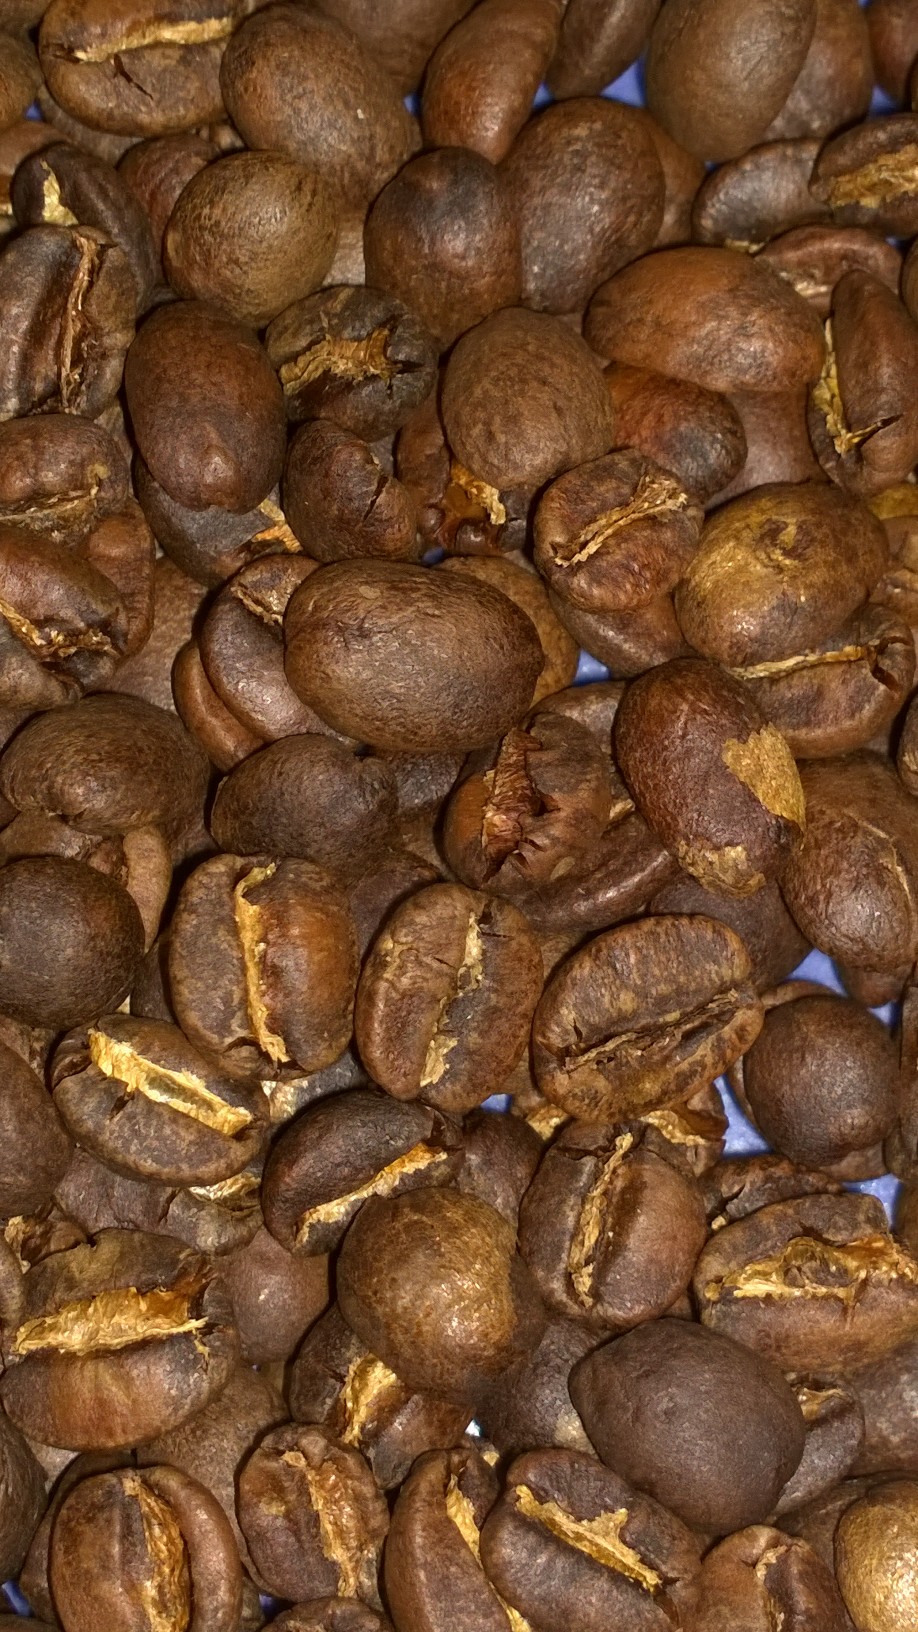 Roasted coffee beans Organic D.R. Congo Kivu 5 Pound Bag